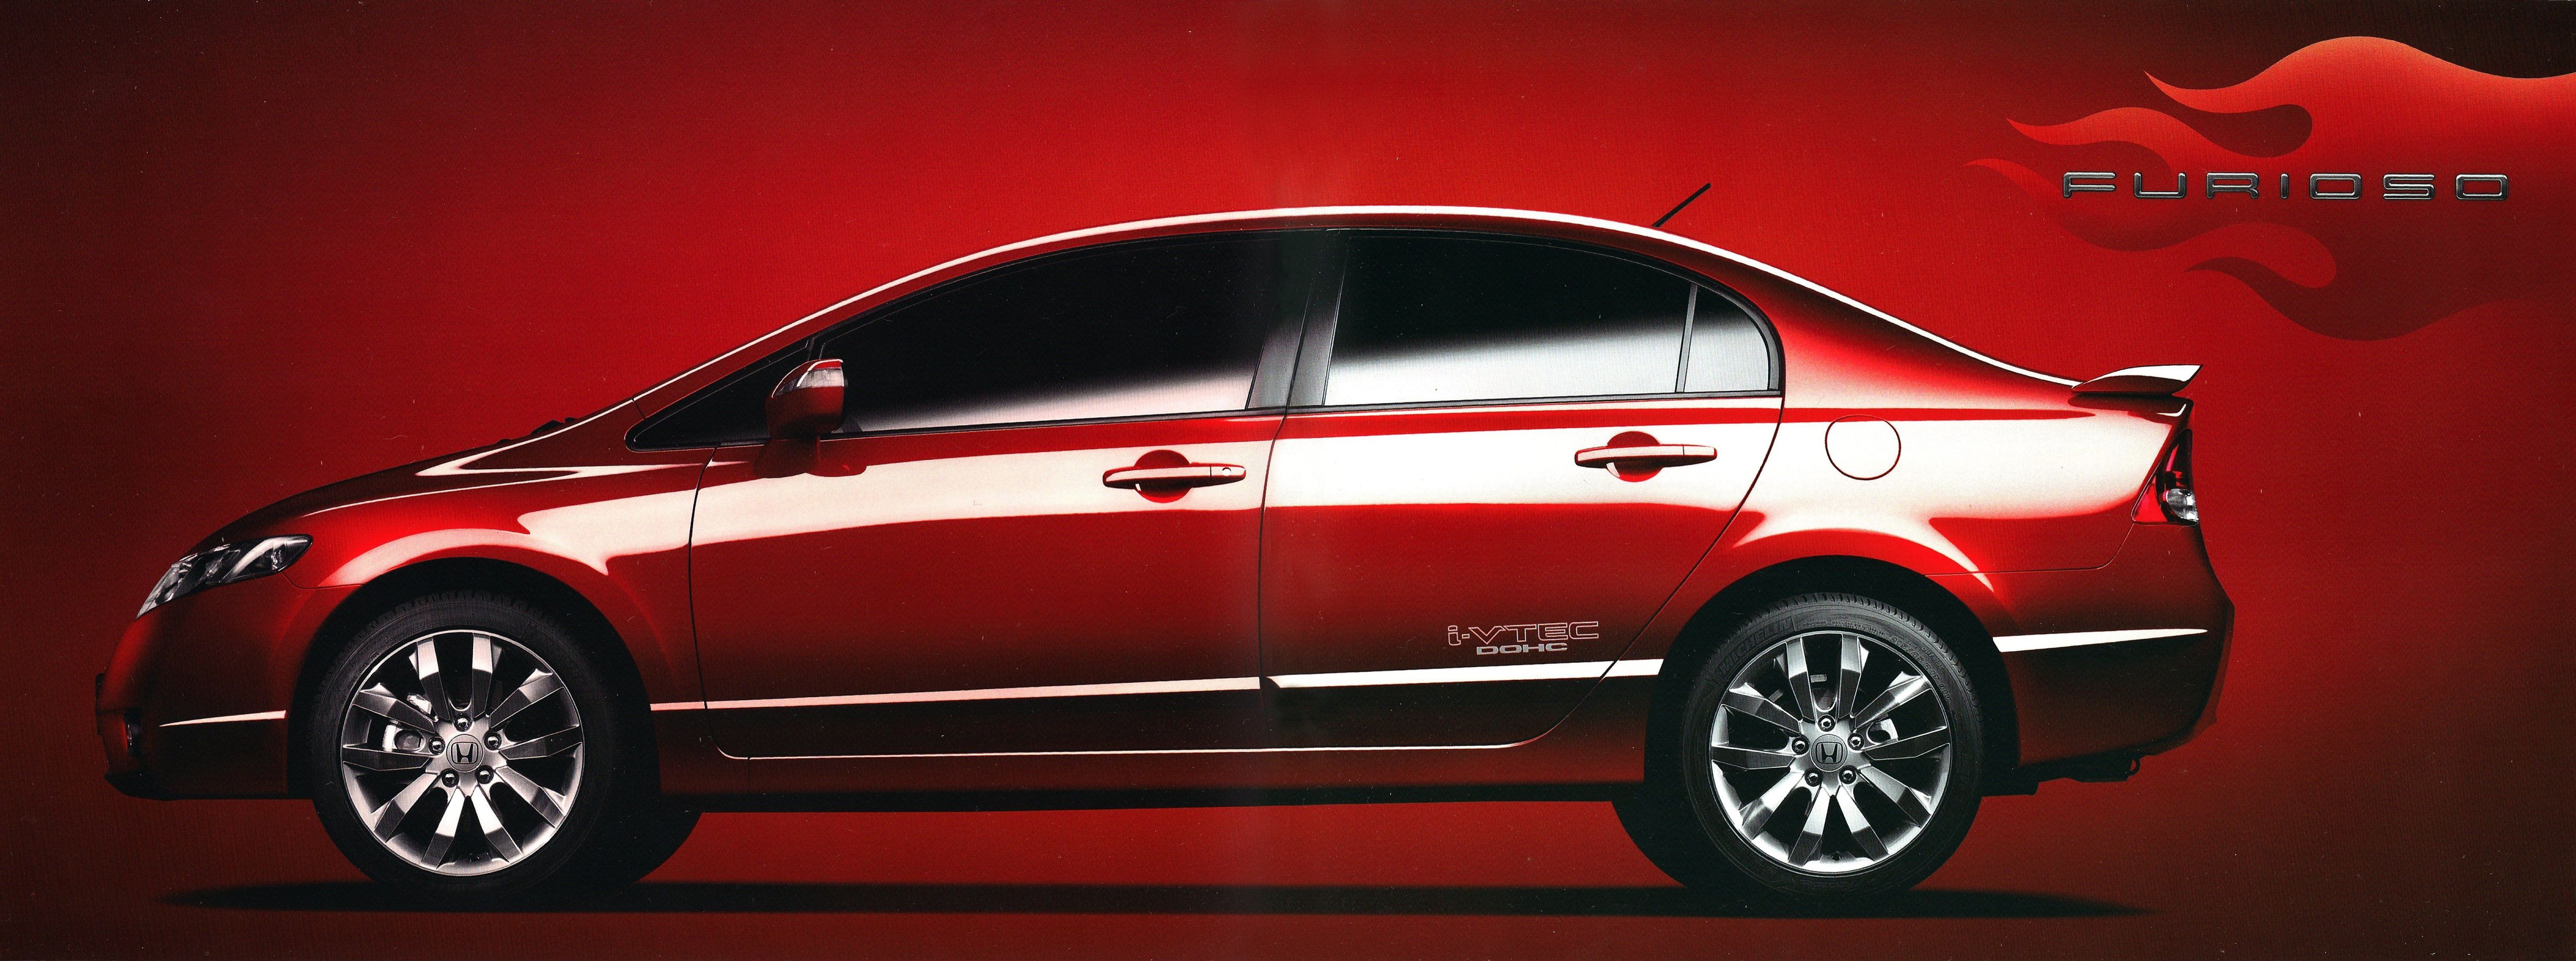 2009 Honda civic si brochure